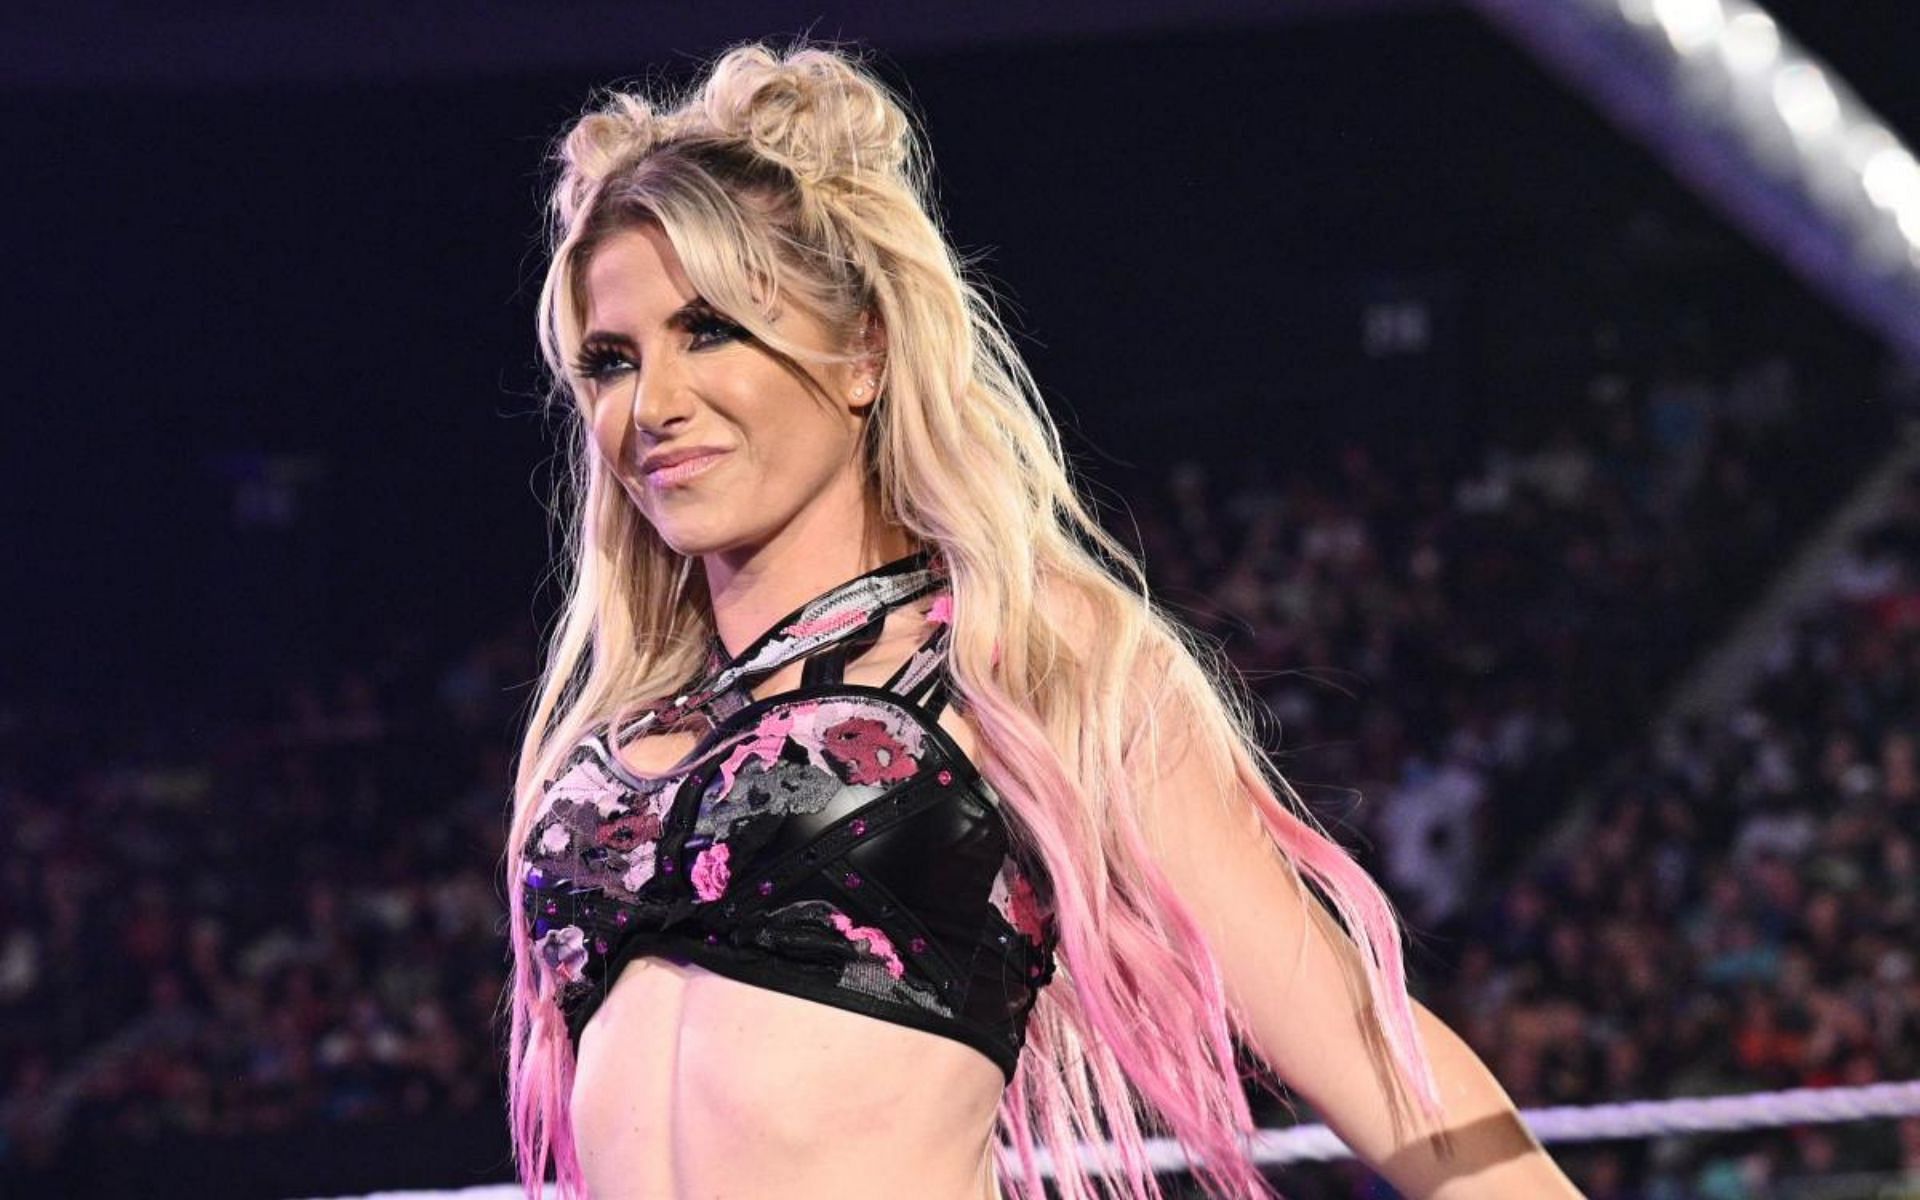 Alexa Bliss has been on a winning streak since her return to RAW